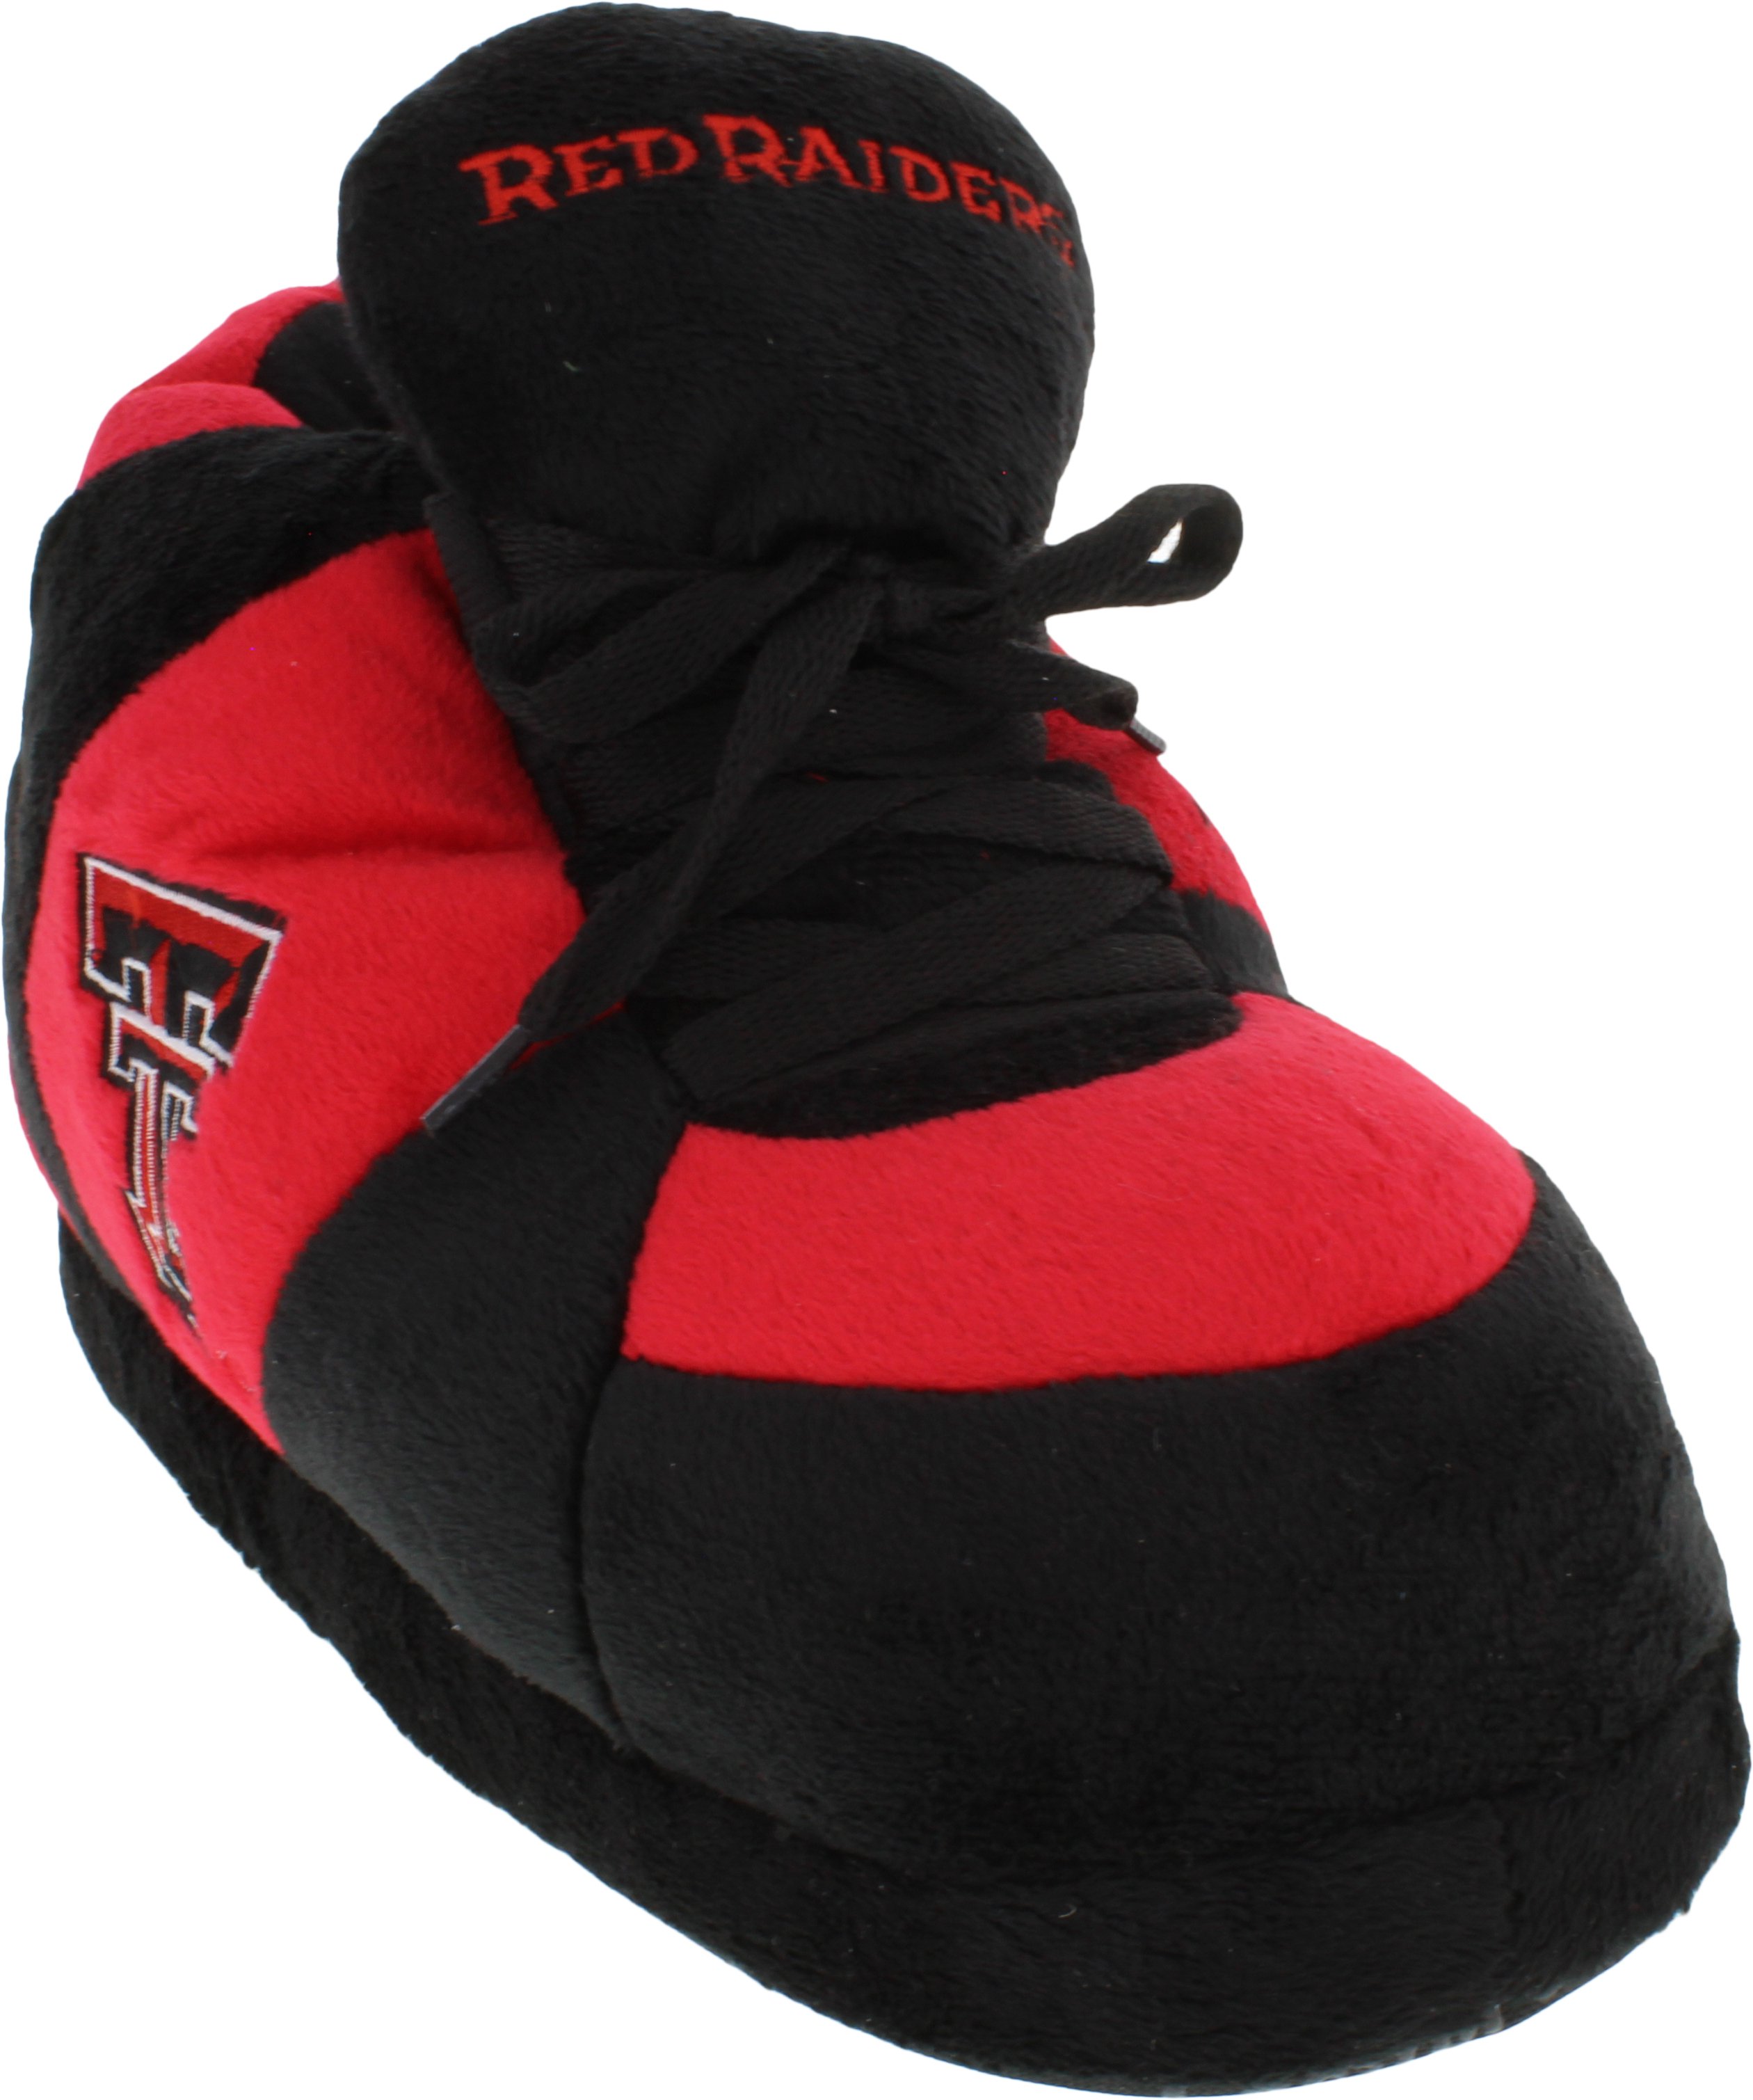 Texas Tech Red Raiders Original Comfy Feet Sneaker Slipper, X-Large - image 5 of 5